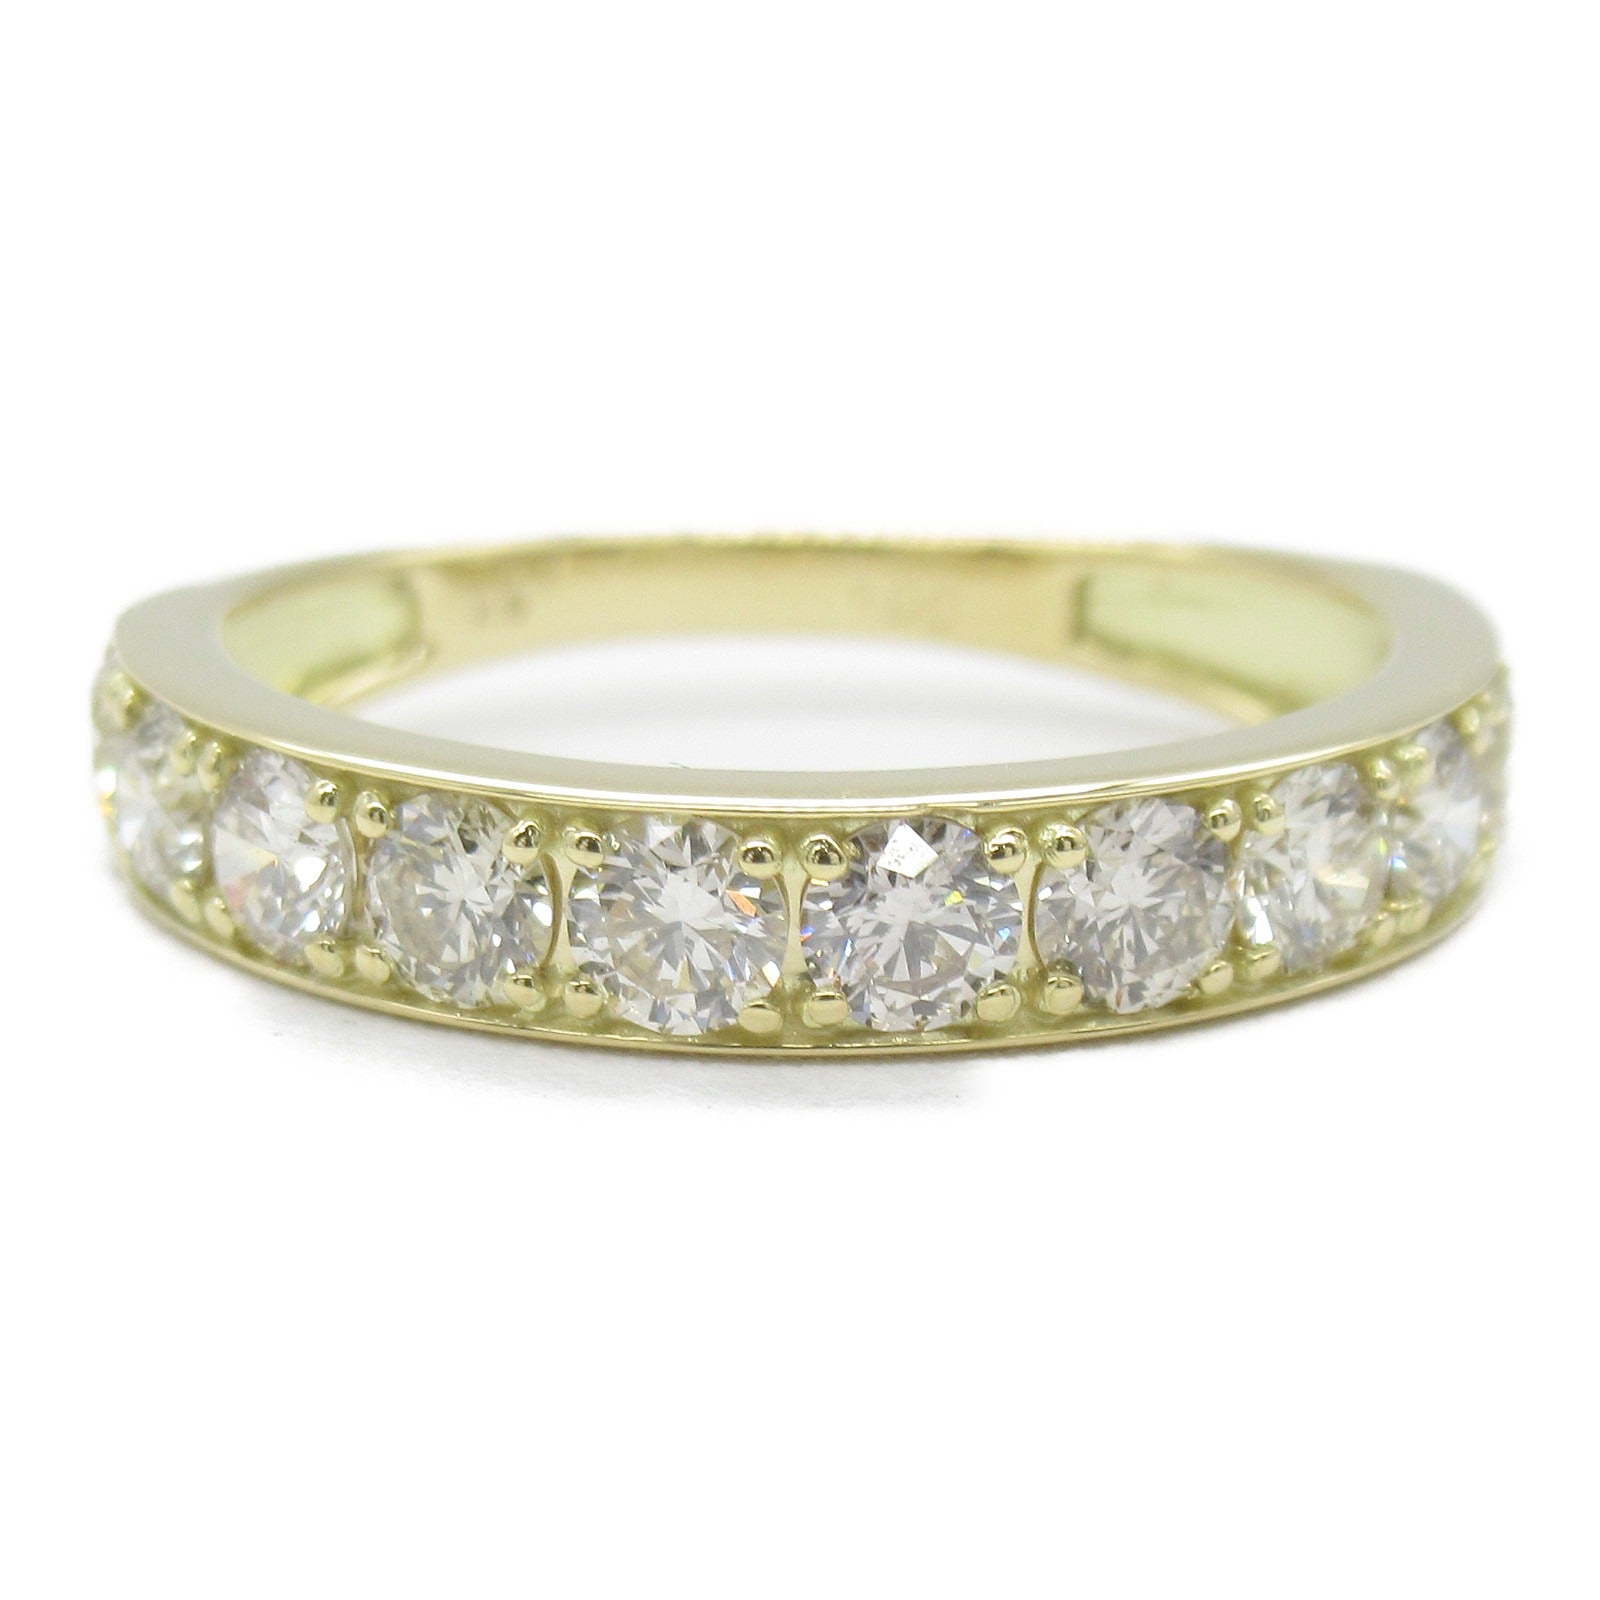 Jewelry Jewelry Diamond Ring Ring Ring Jewelry K18 (yellow g) Diamond  Clear Diamond 2.1g